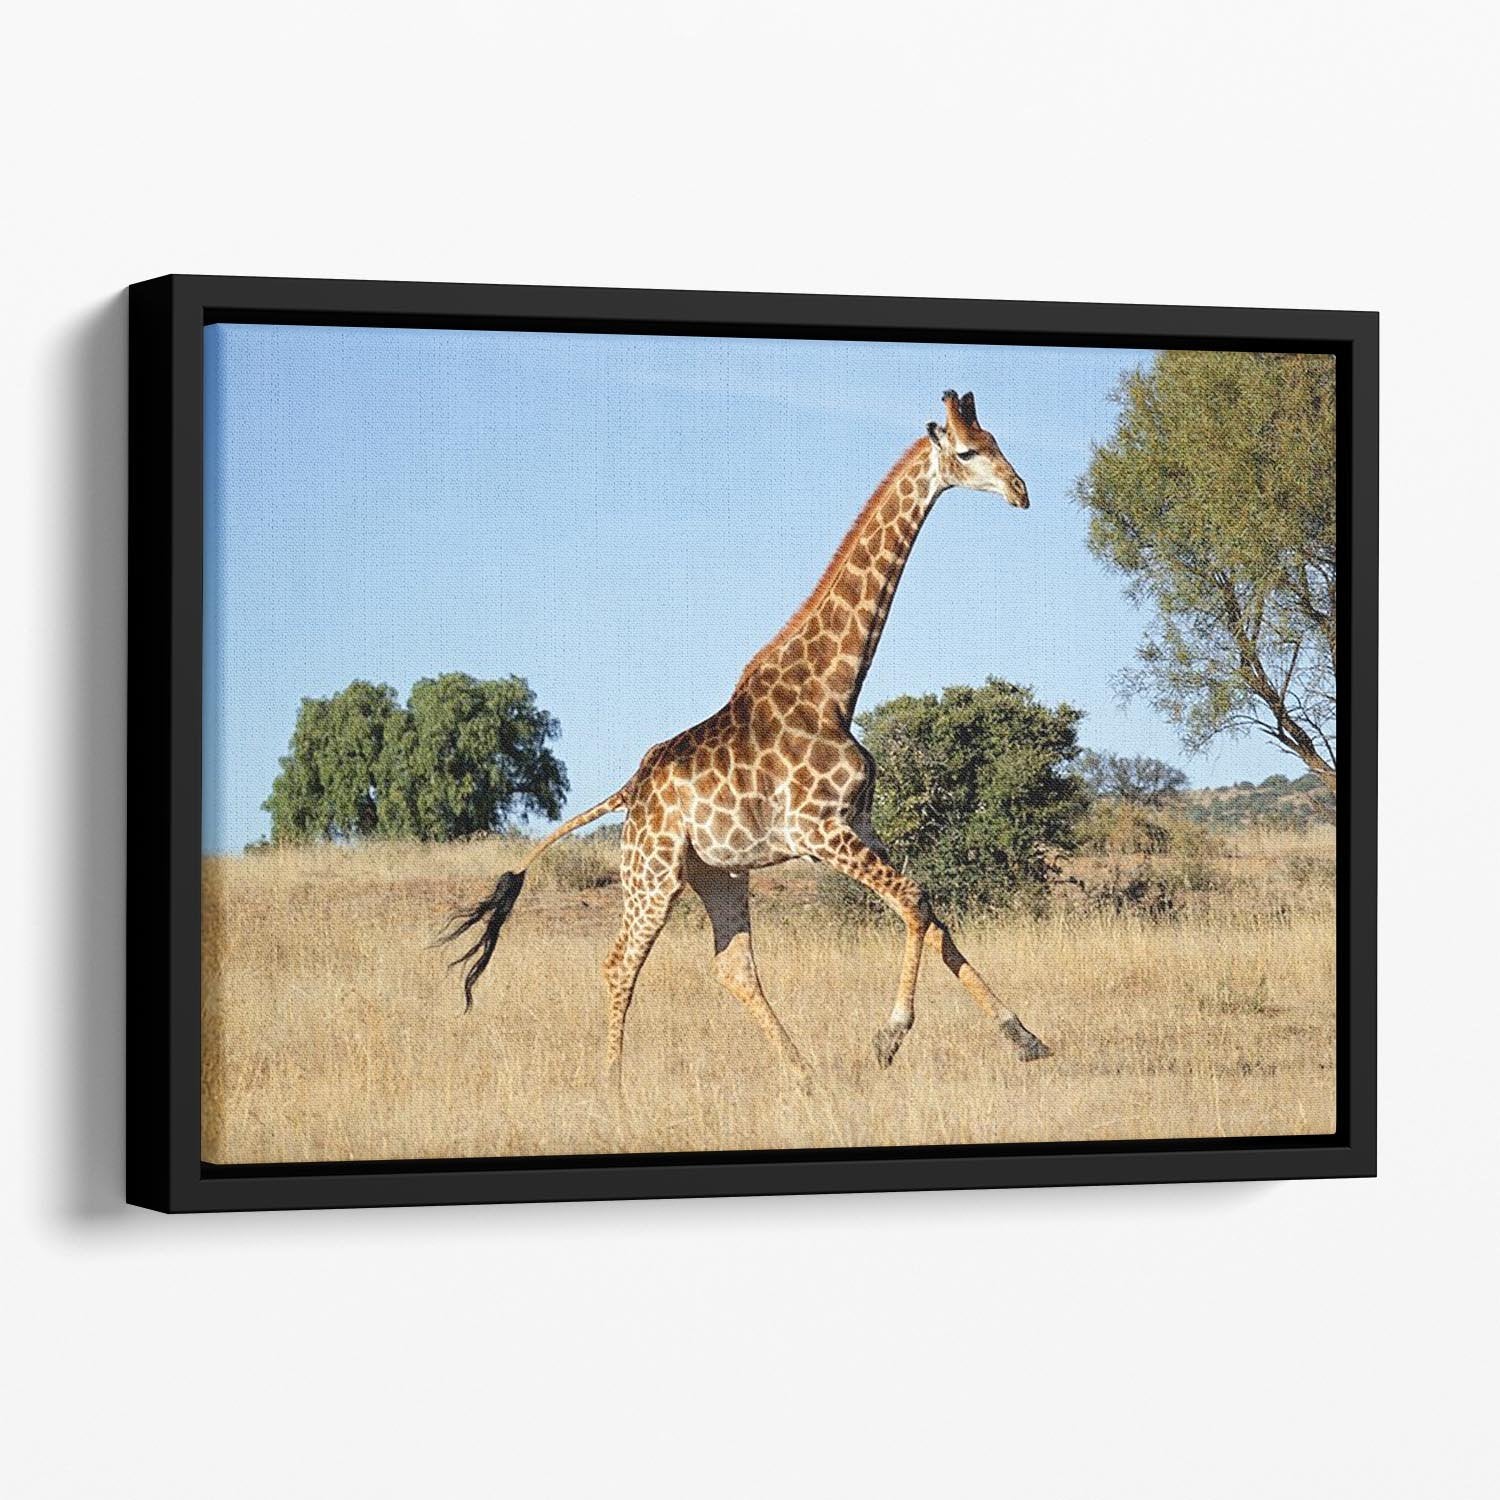 Giraffe running on the African plains South Africa Floating Framed Canvas - Canvas Art Rocks - 1